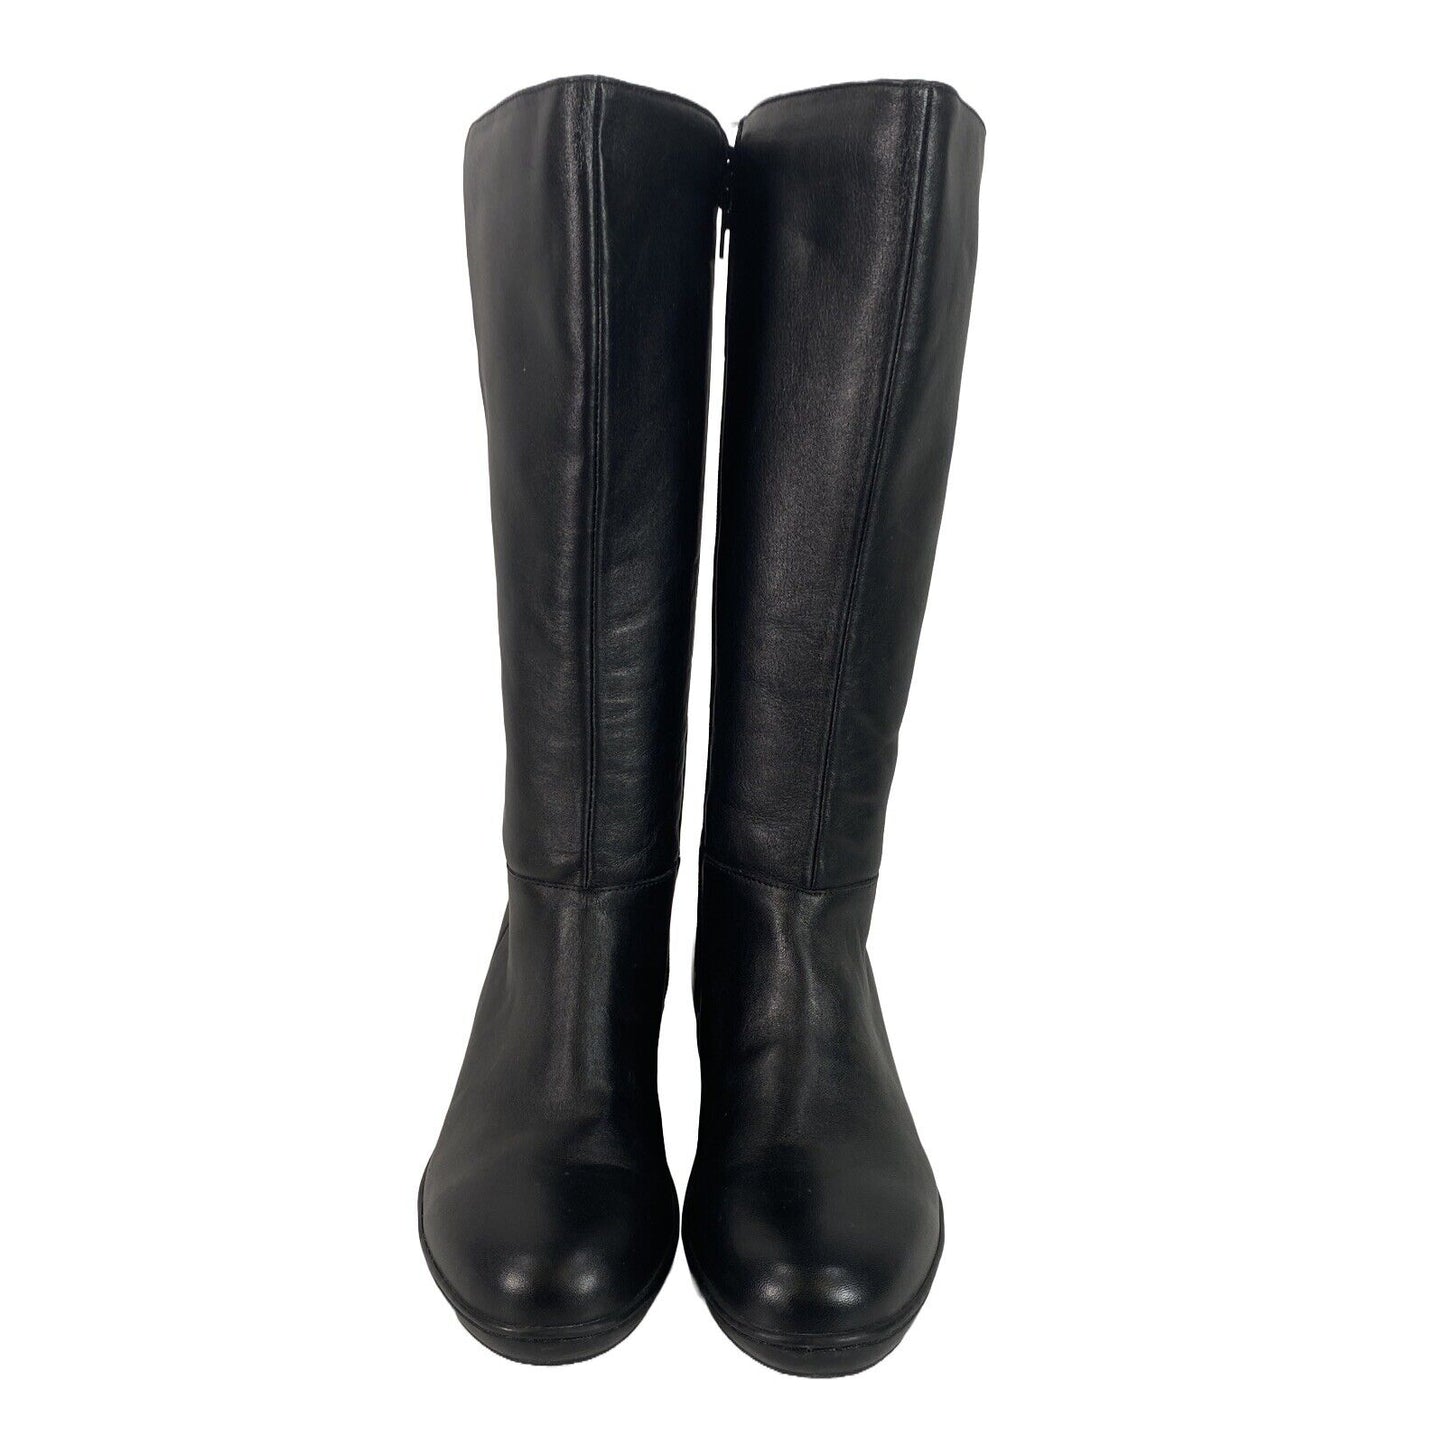 David Tate Women's Black Leather Mid Calf Full Zip Riding Boots - 7.5M